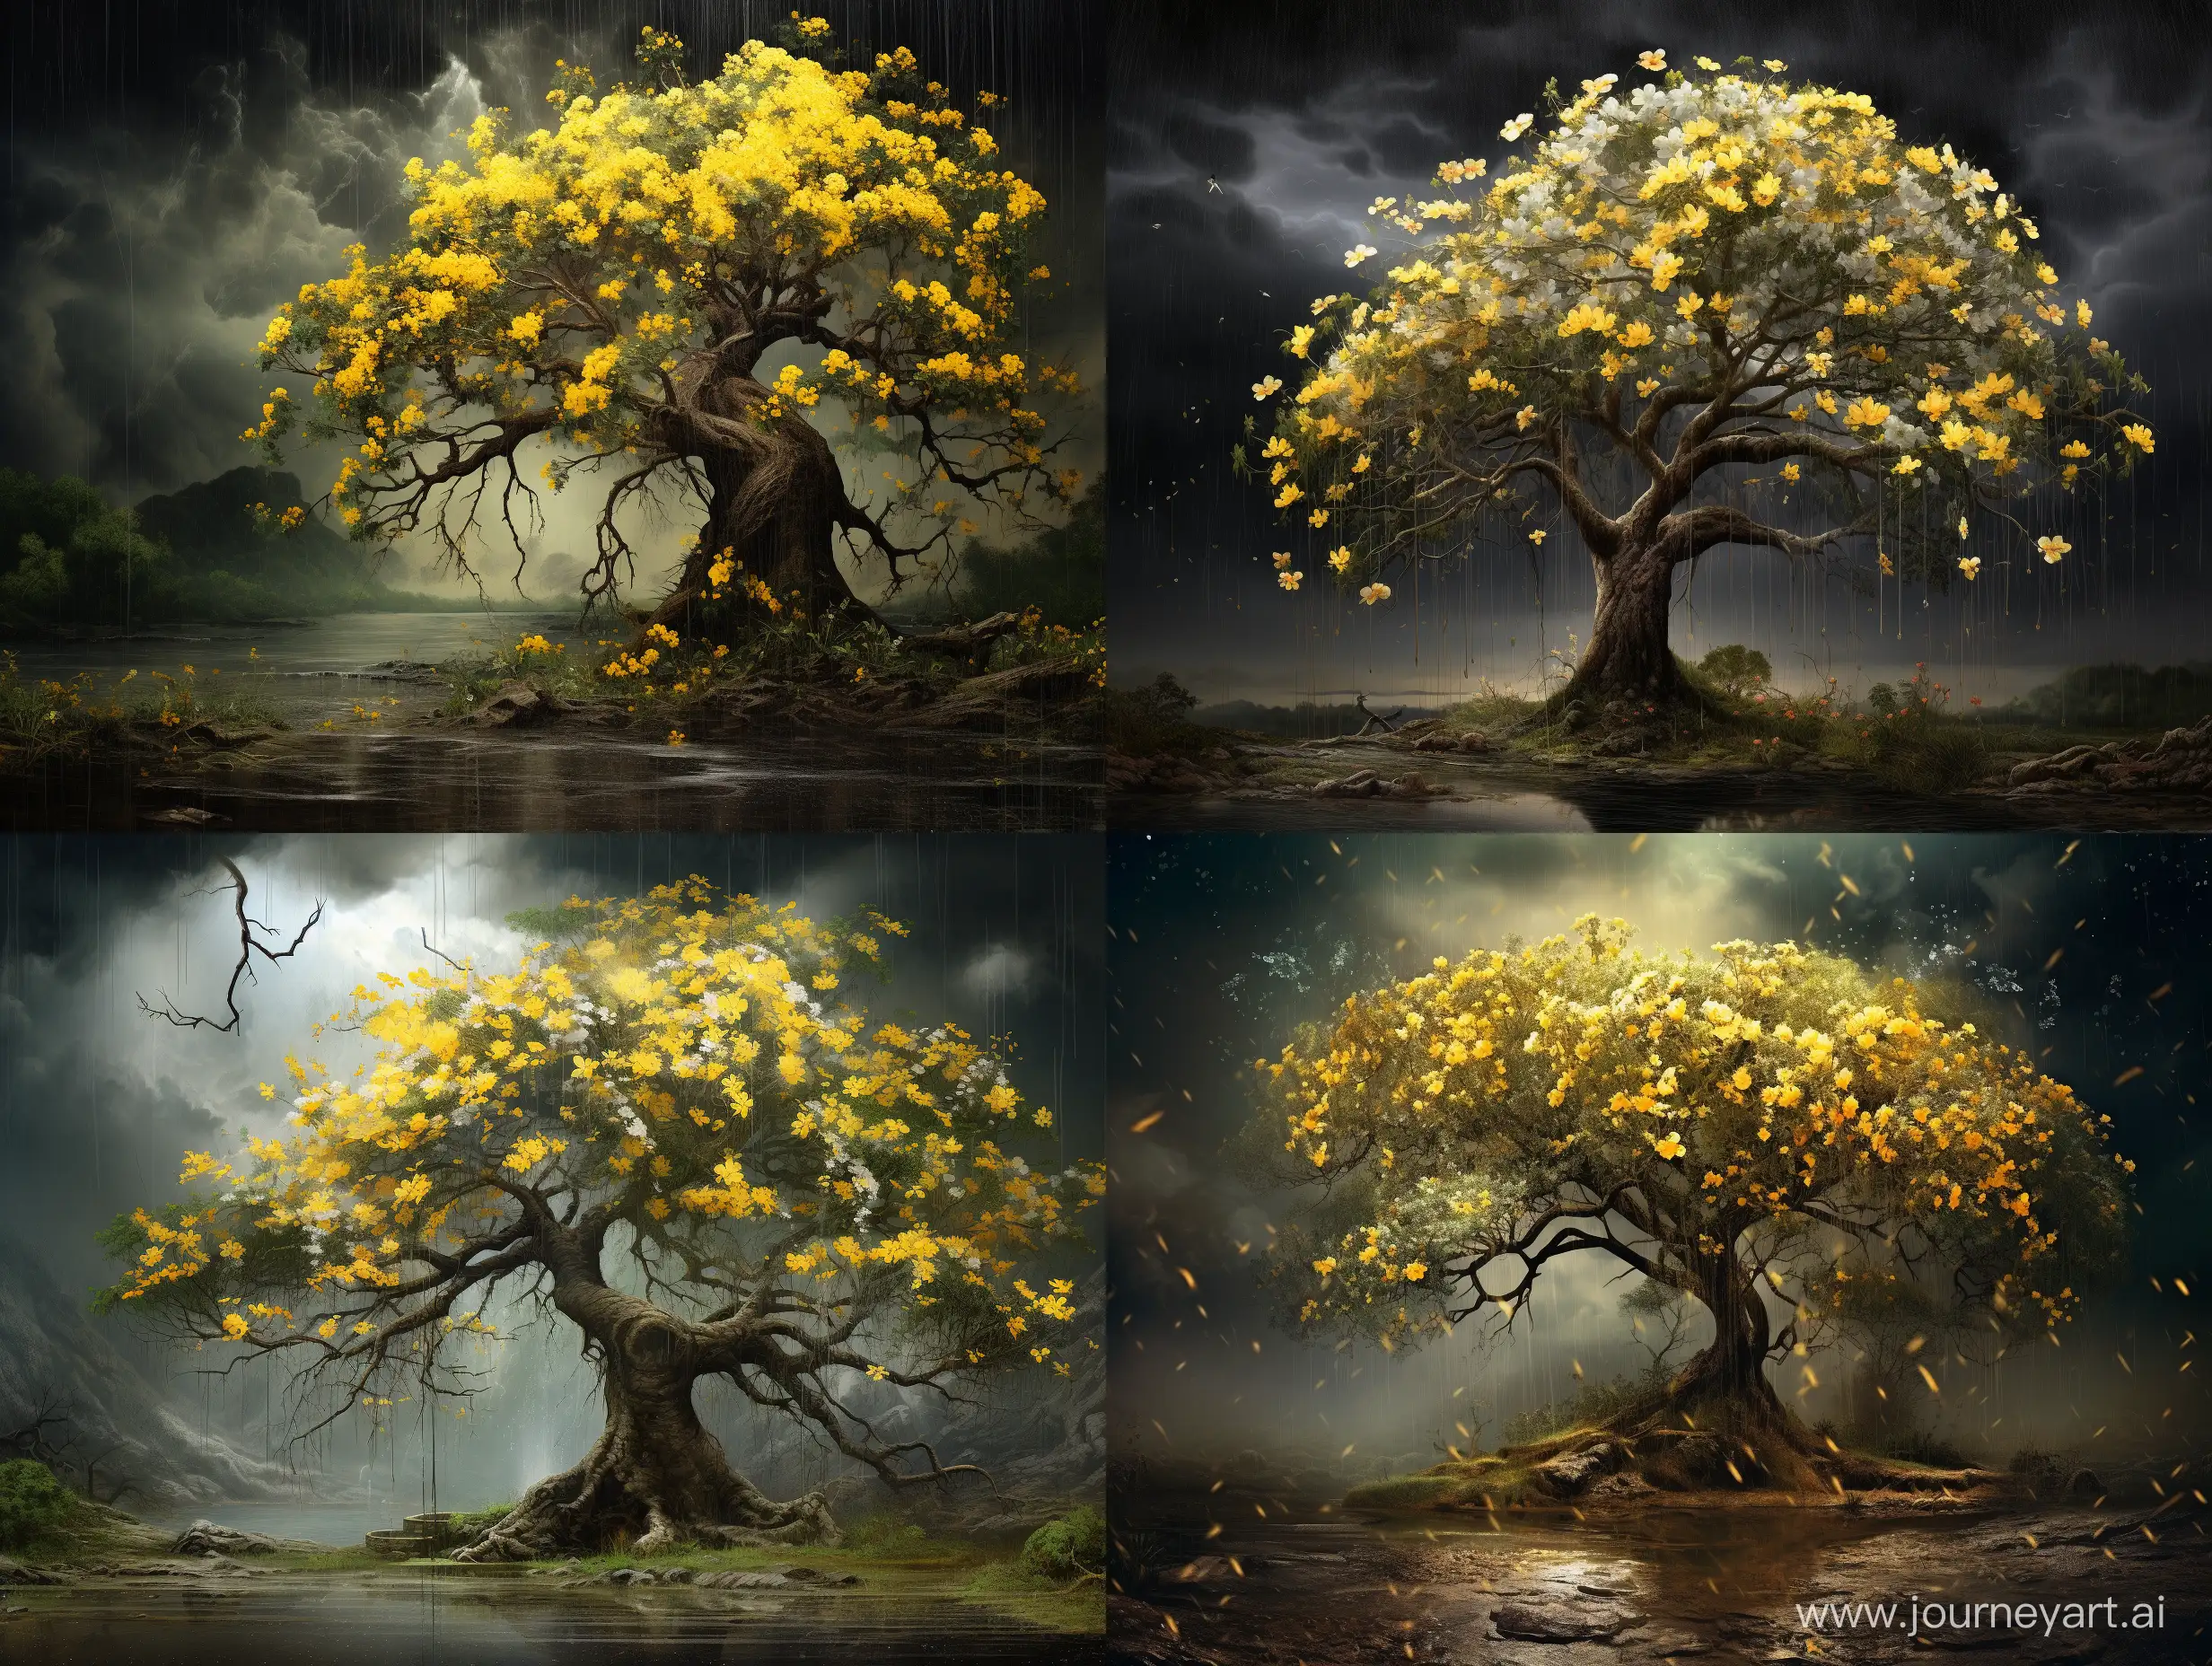 Vibrant-Yellow-Flowers-Tree-in-Rain-Shower